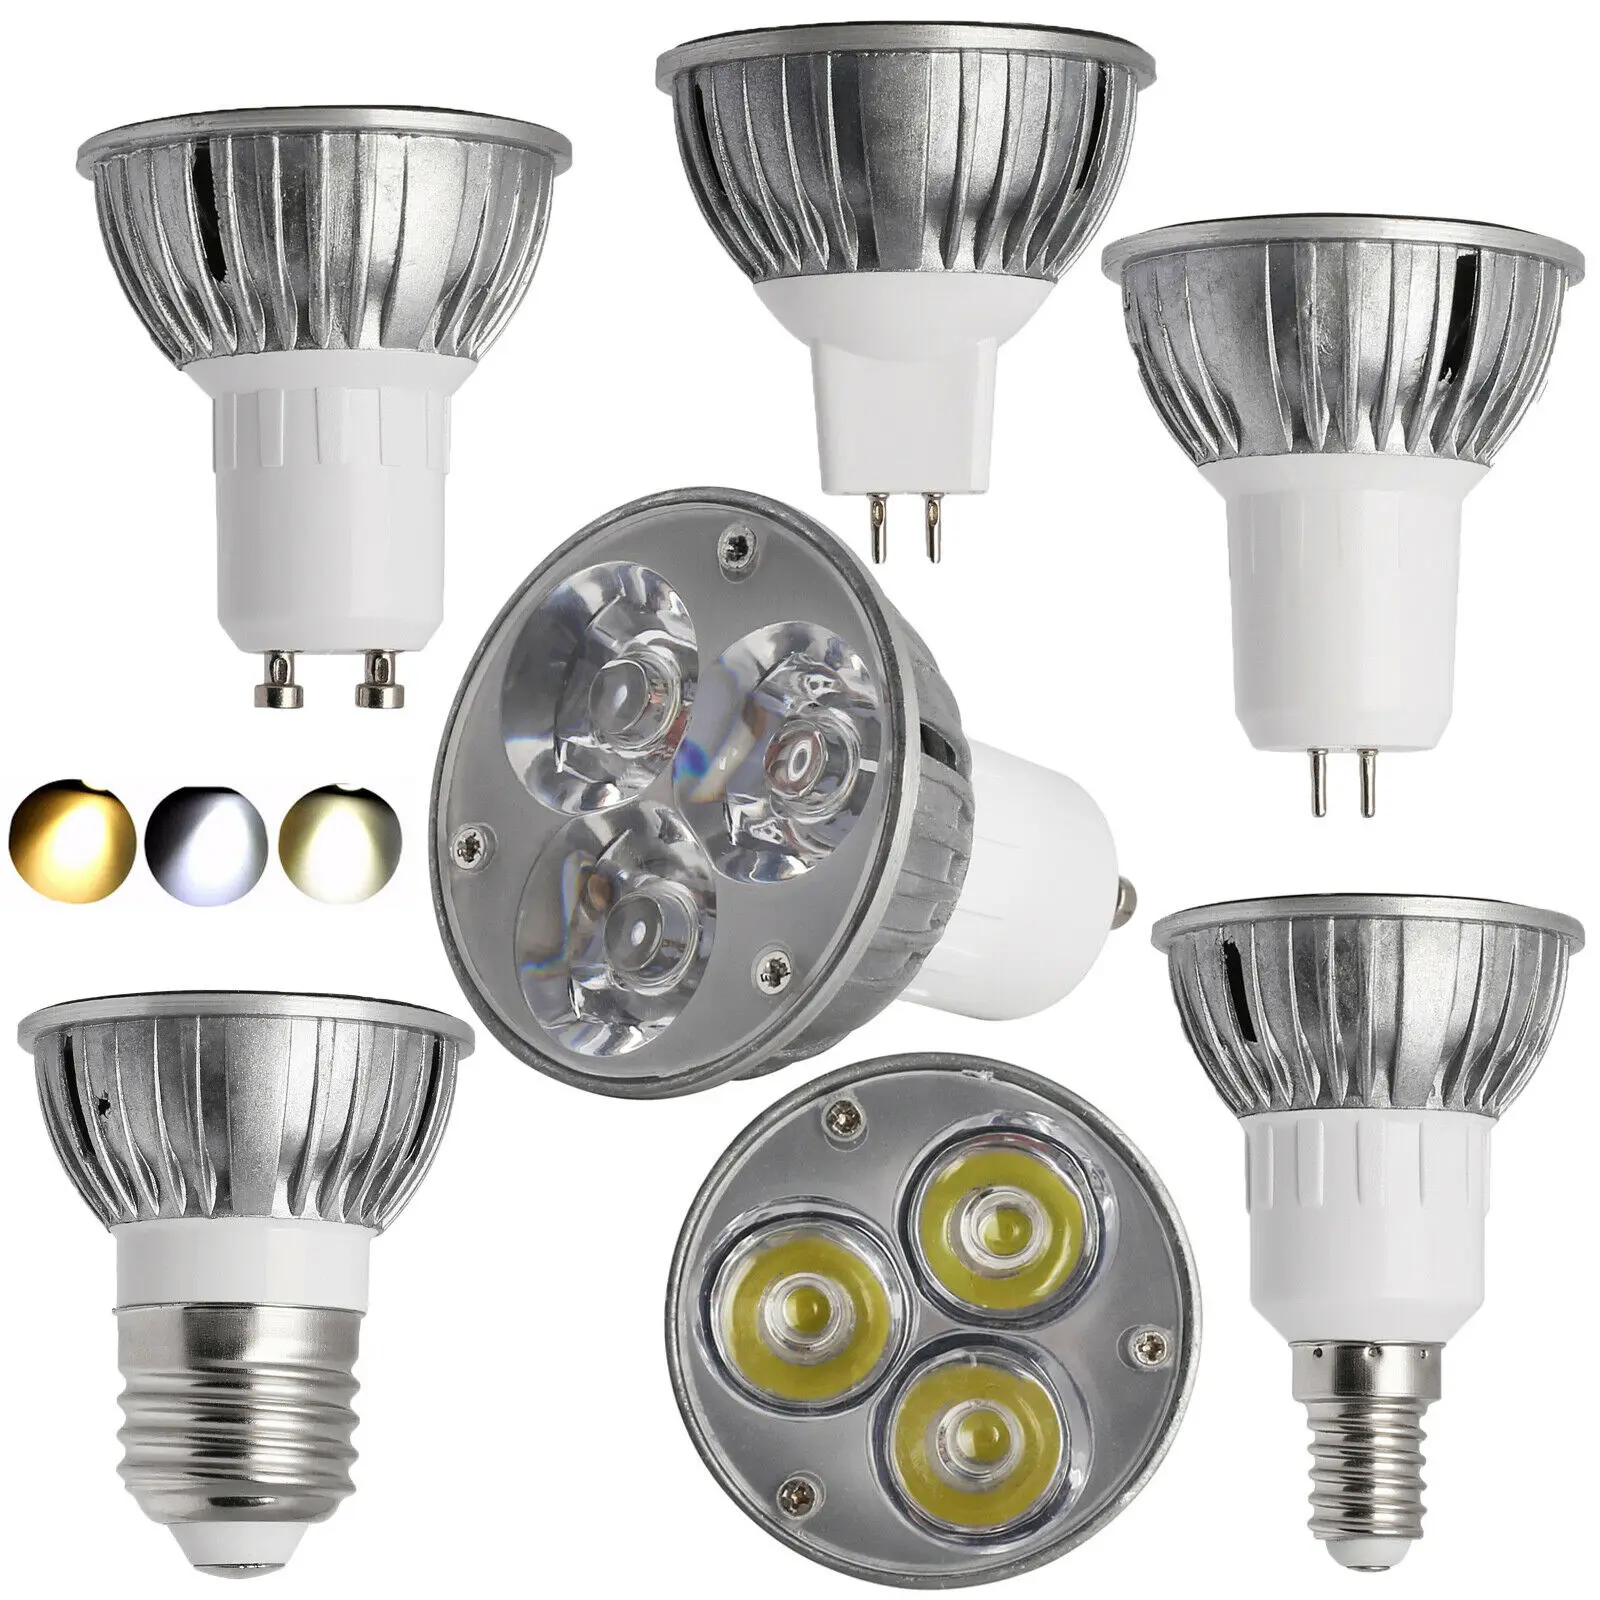 

3W LED Bulb GU10 E27 E14 E12 B15 B22 GU5.3 LED Dimmable Spotlight Light Bulb Chandeliers Replace 30W Halogen Lamp AC 110V 220V